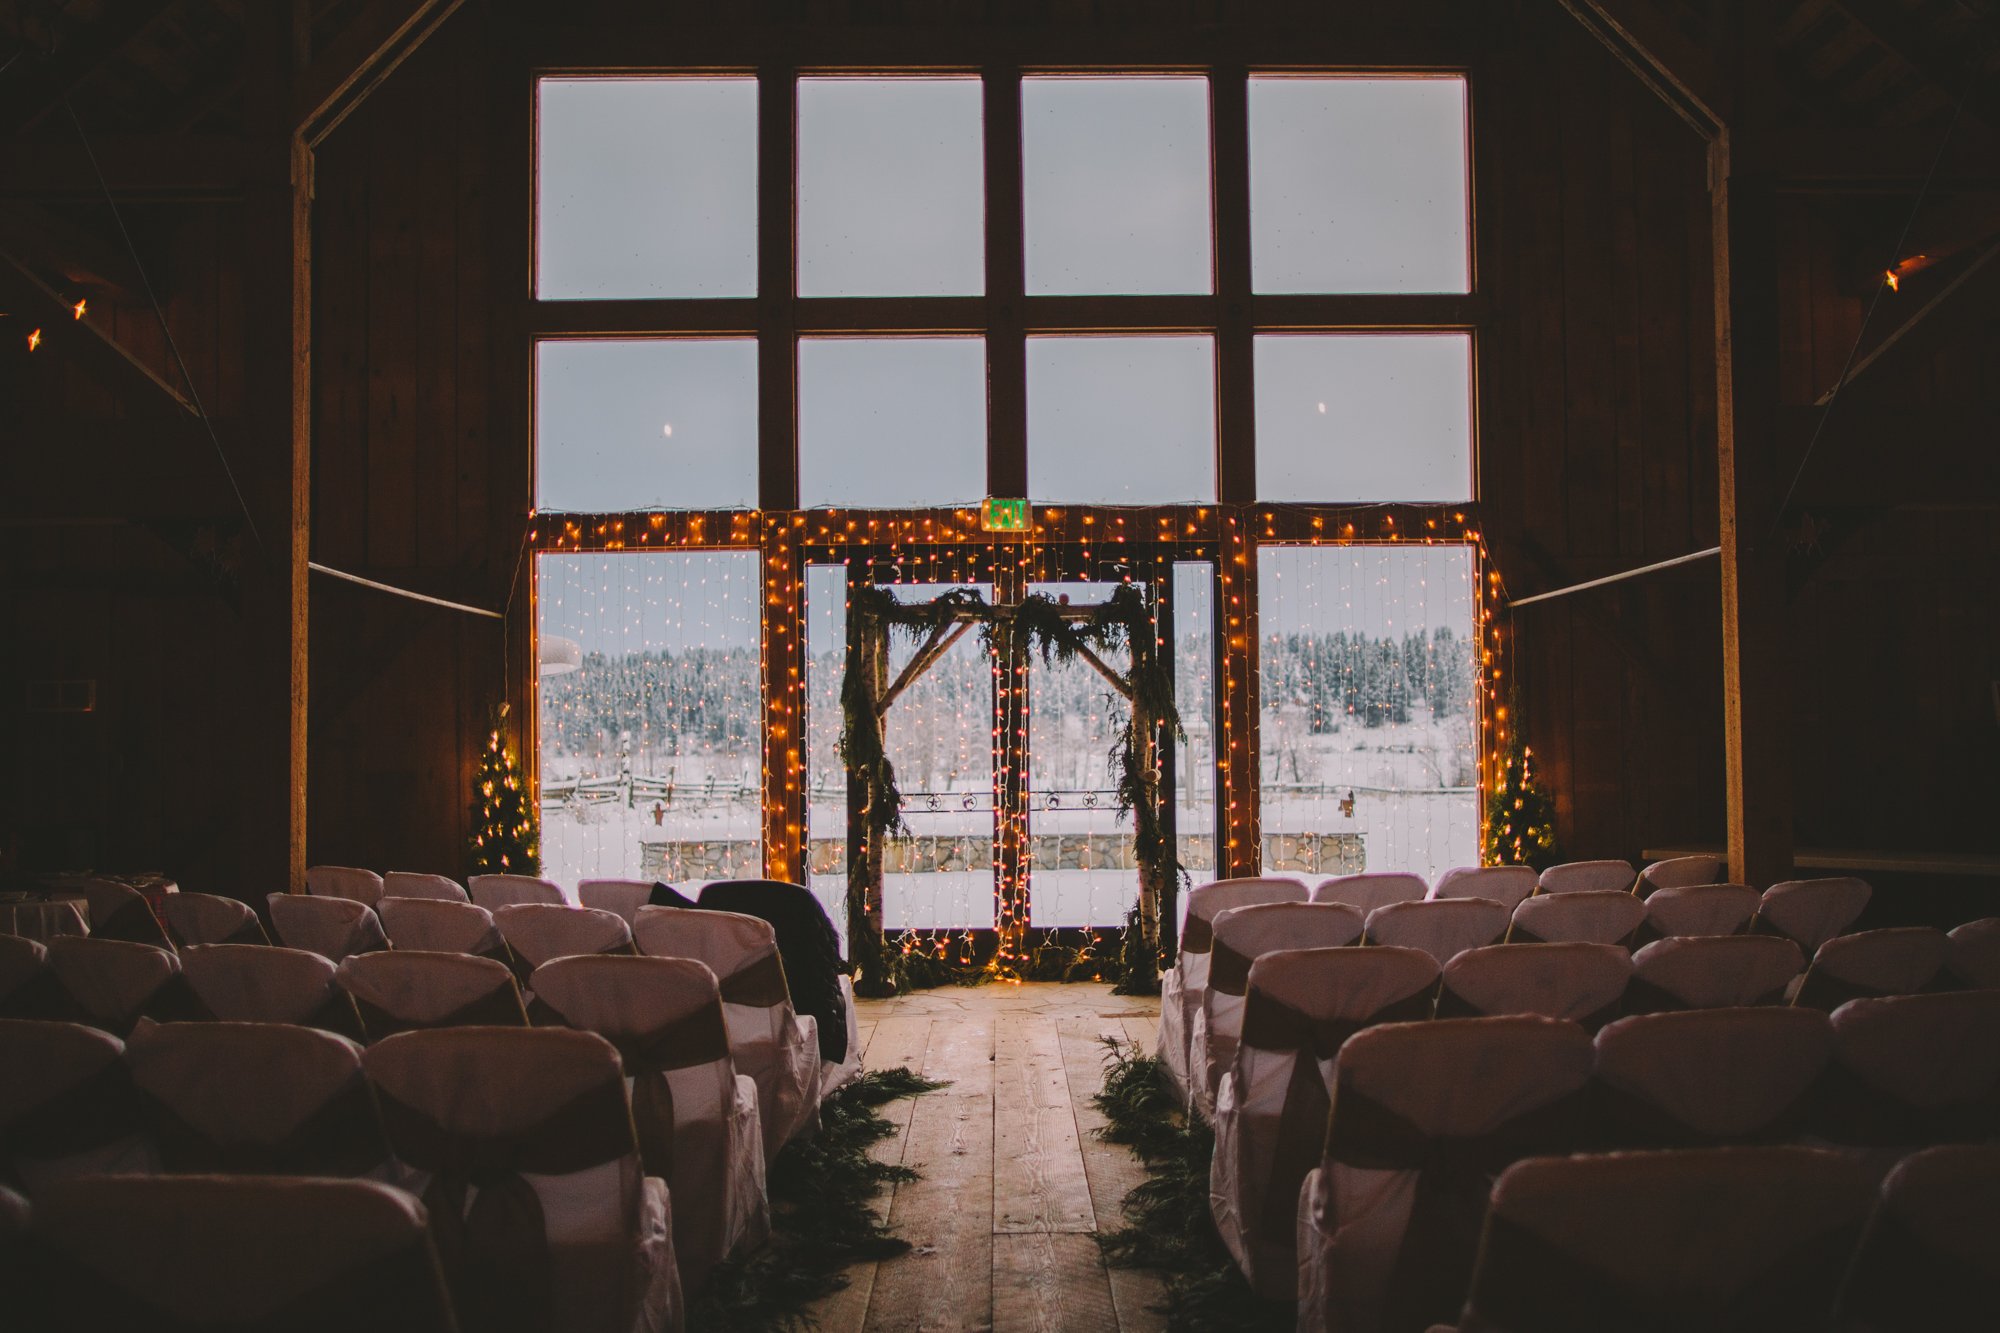 Cattle Barn Wedding in the Christmas Winter Snow | Cle Elum Wedding | Pacific Northwest Winter Wedding | Christmas Themed Wedding | Tida Svy Photography | www.tidasvy.com